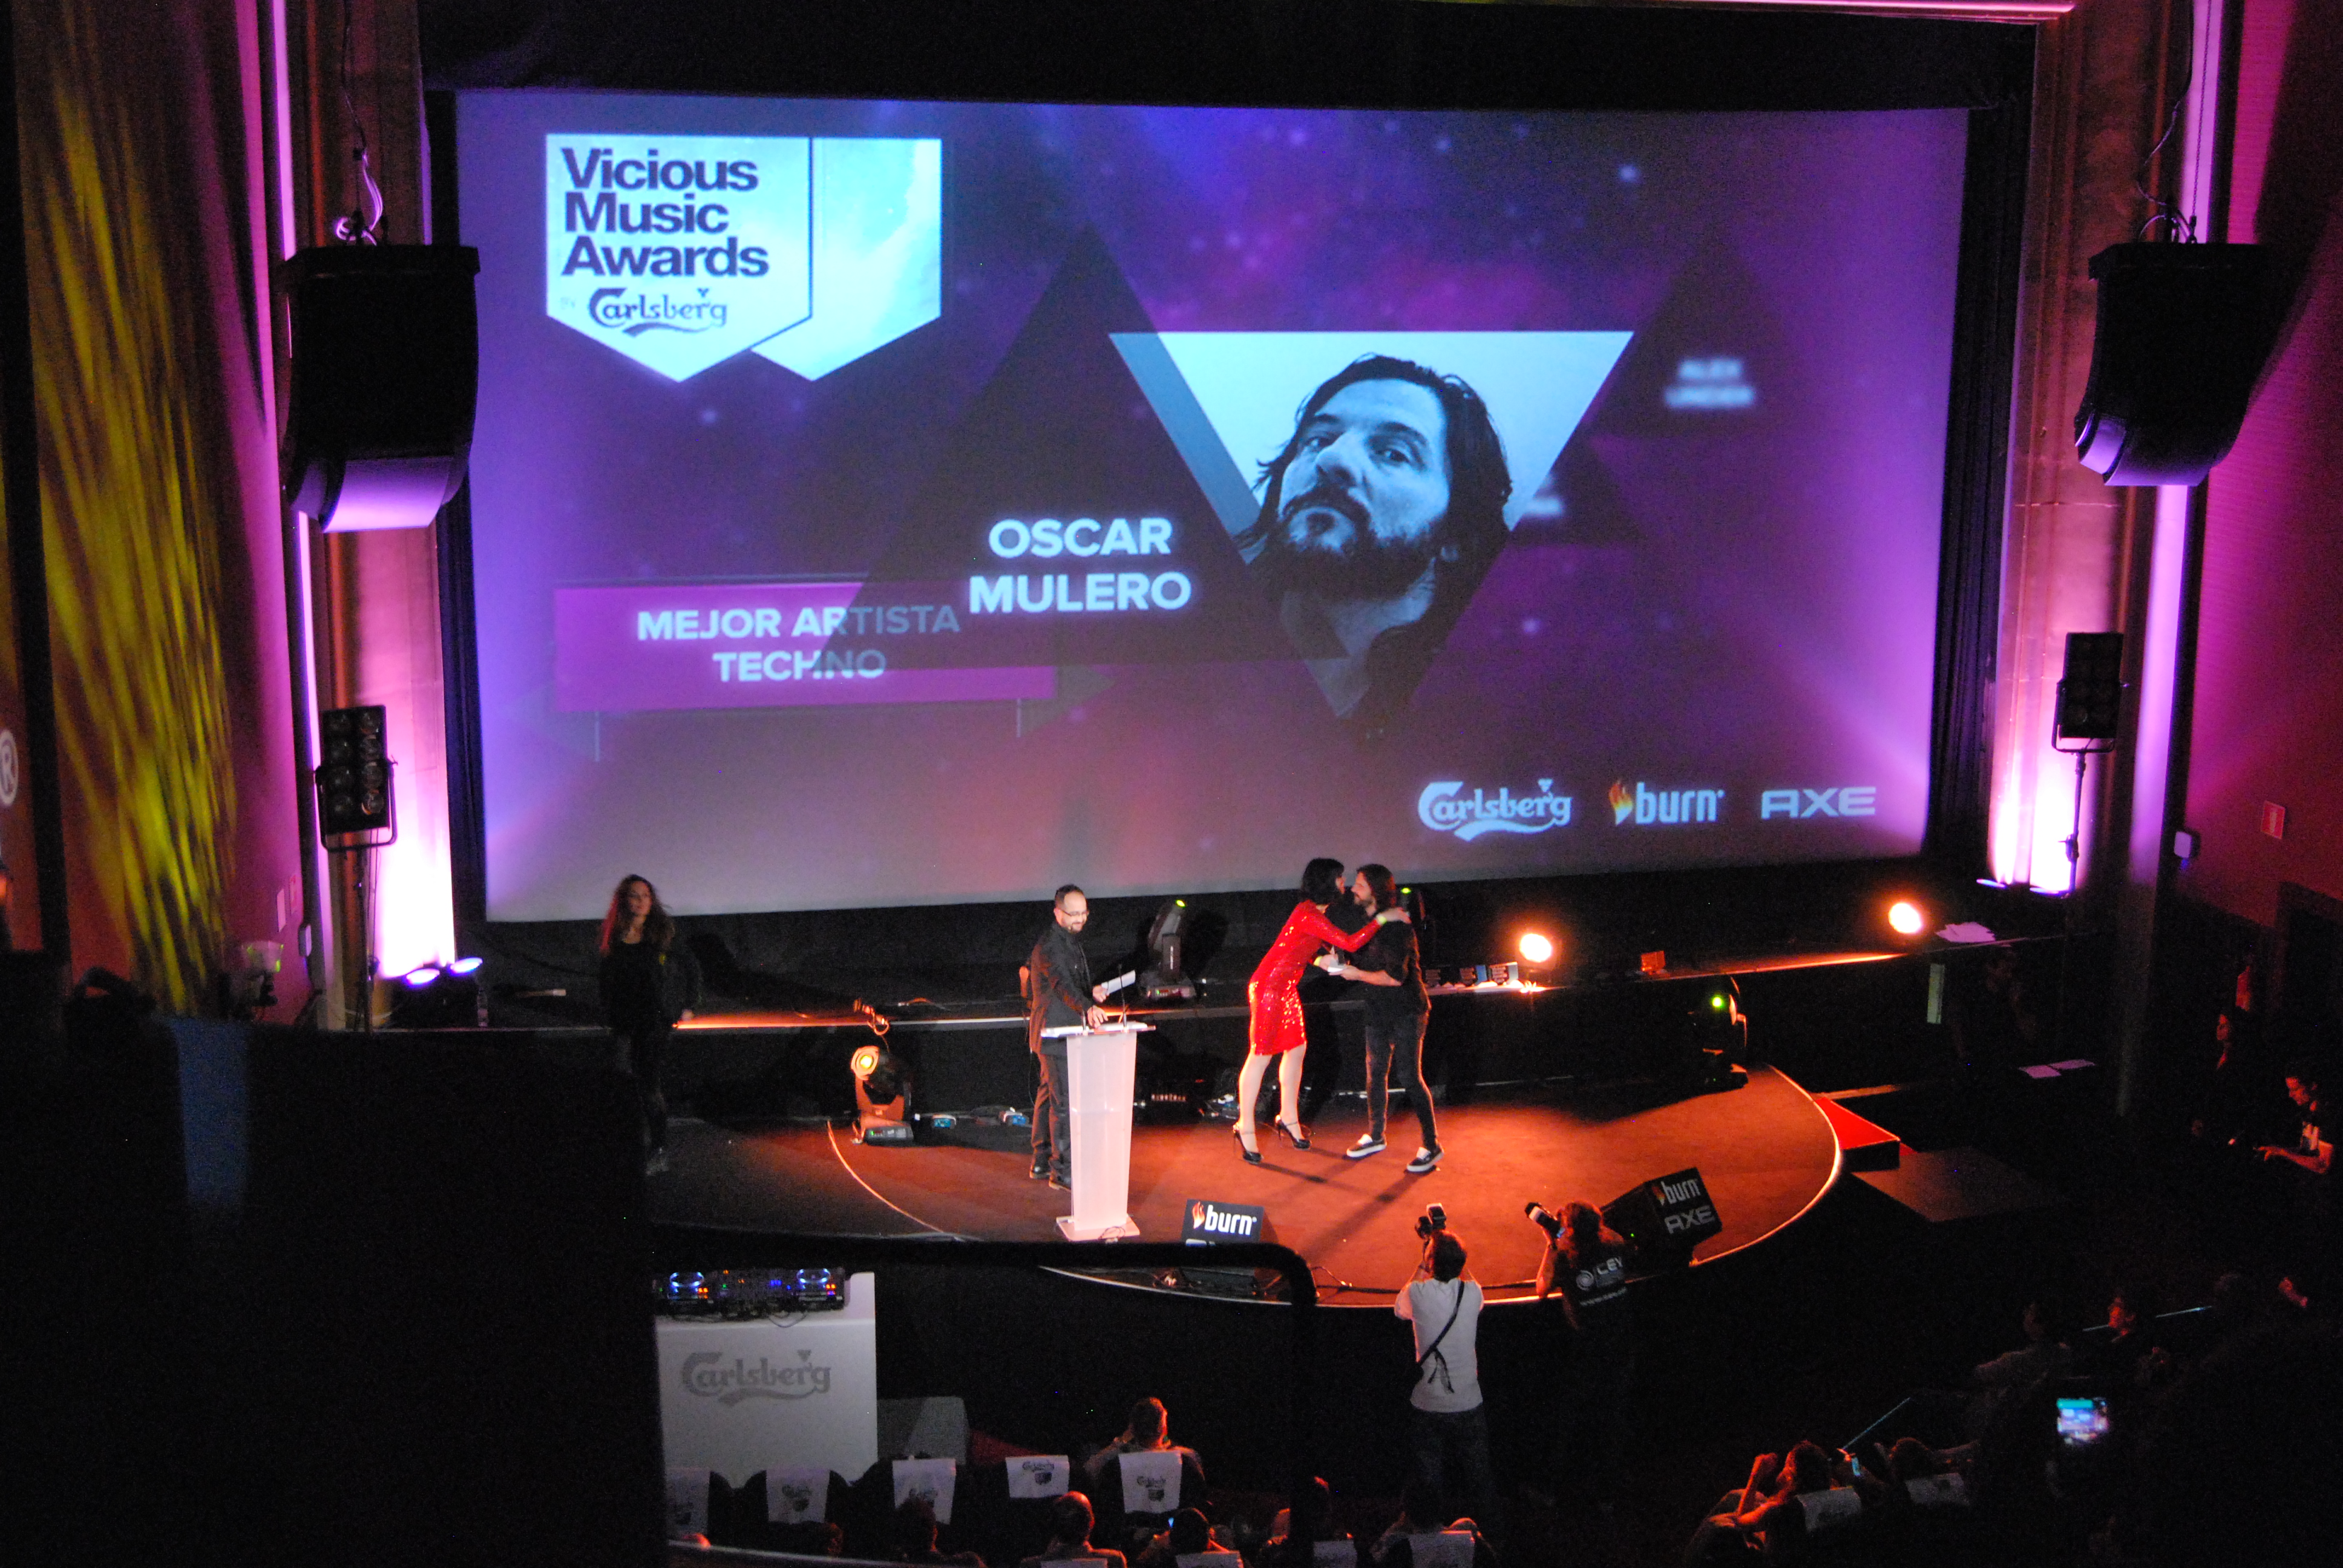 oscar-mulero-vicious-music-awards-mejor-dj-techno-2013-spain